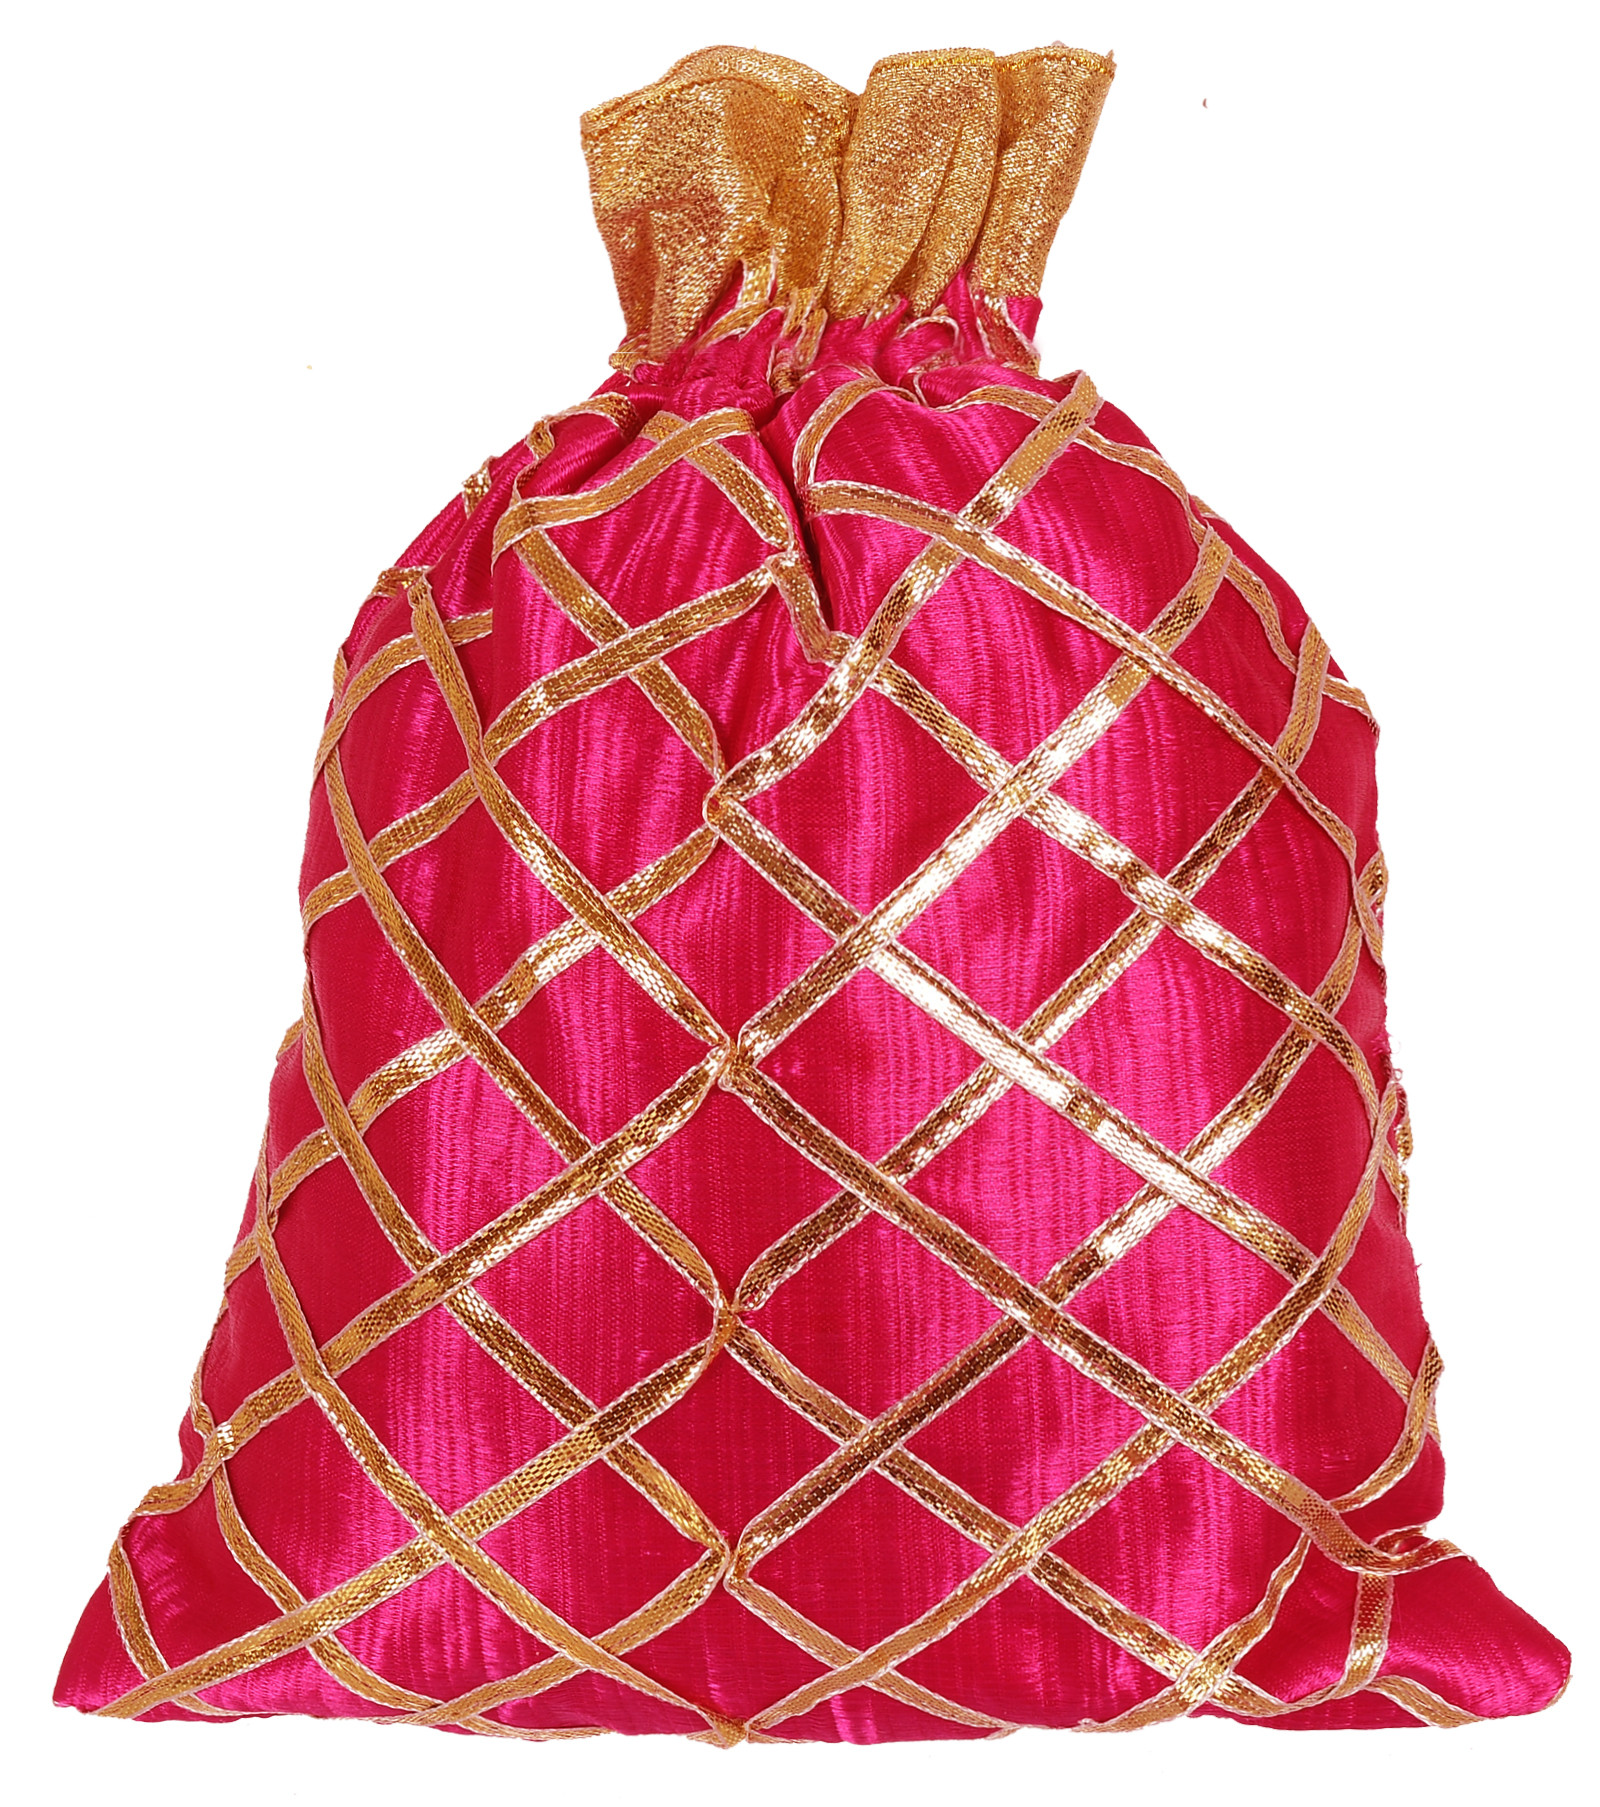 Kuber Industries Drawstring Potli Bag Party Wedding Favor Gift Jewelry Bags-Pack of 4 (Red & Orange & Pink & Yellow)